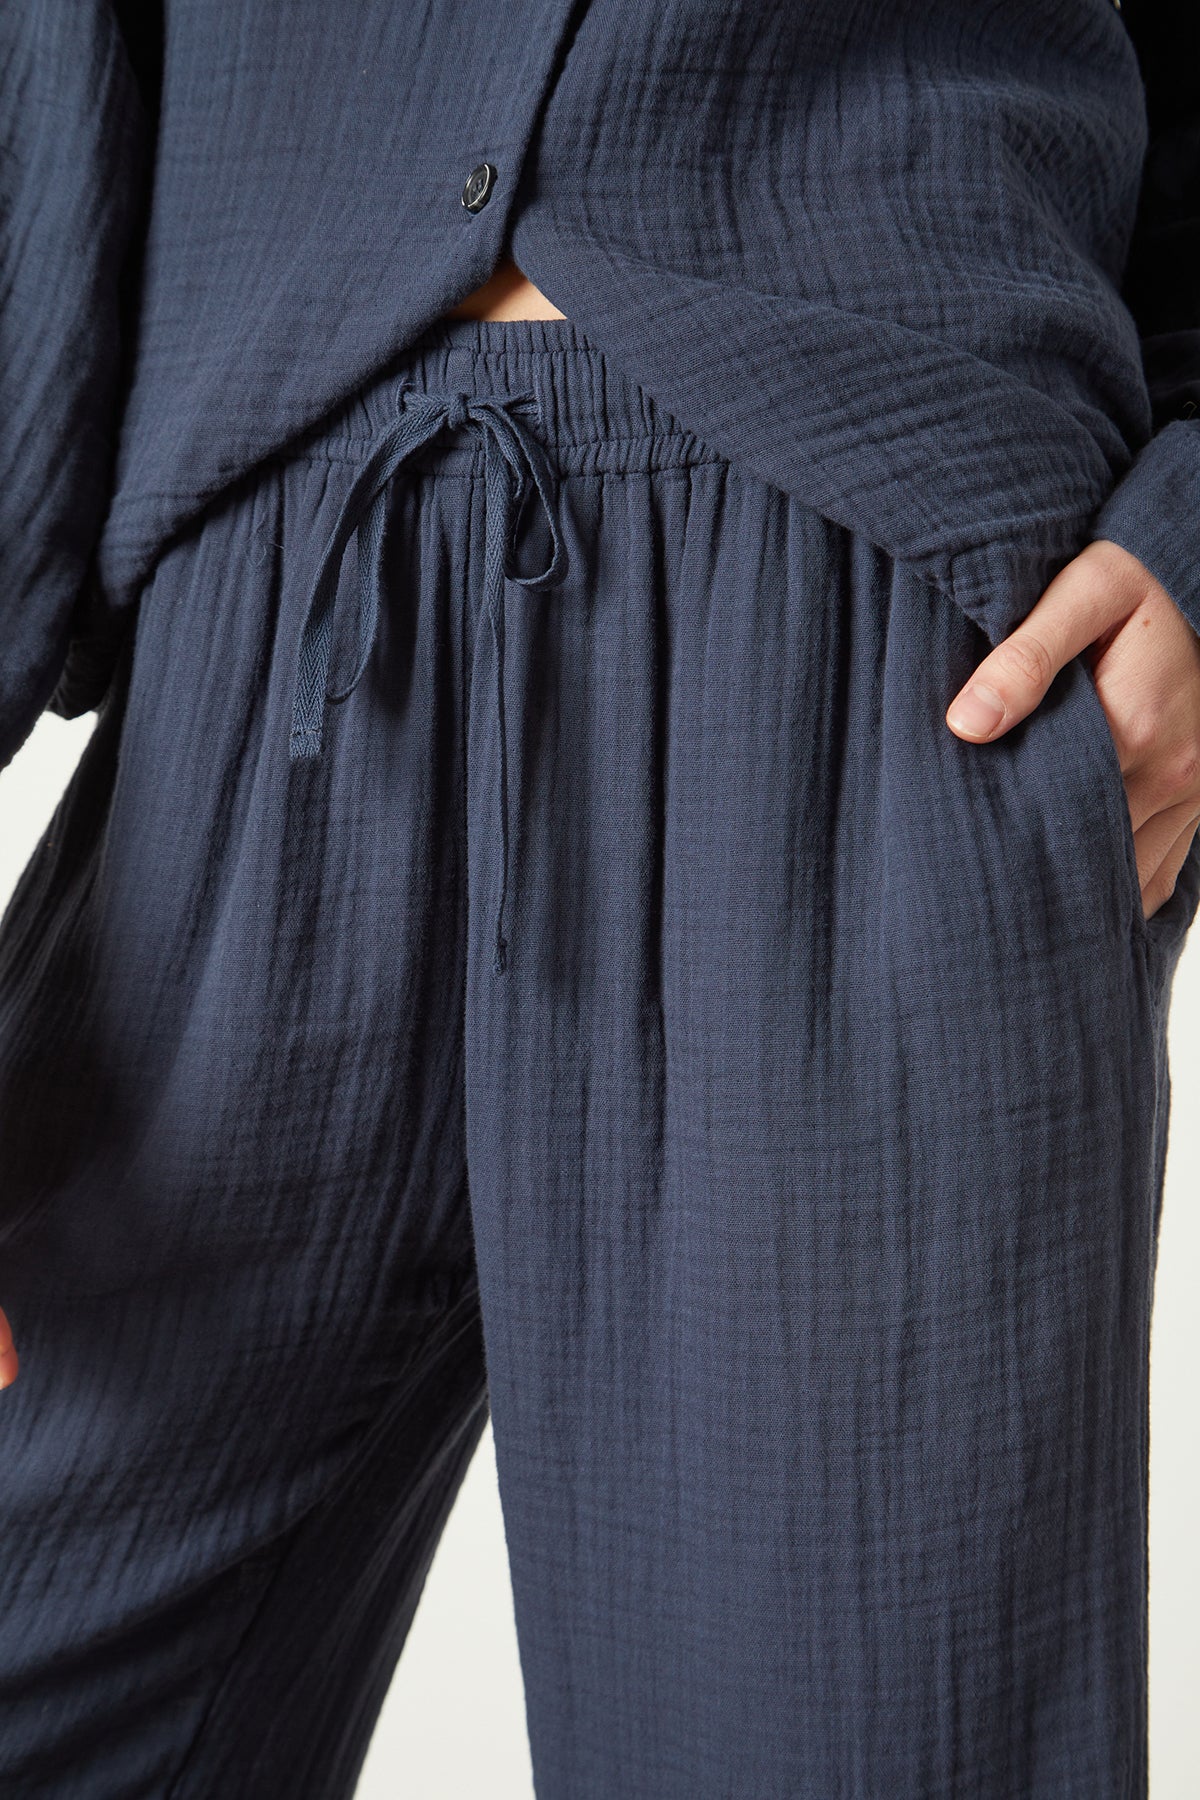 A woman wearing a dark blue Jenny Graham Home pajama pant.-25519563342017